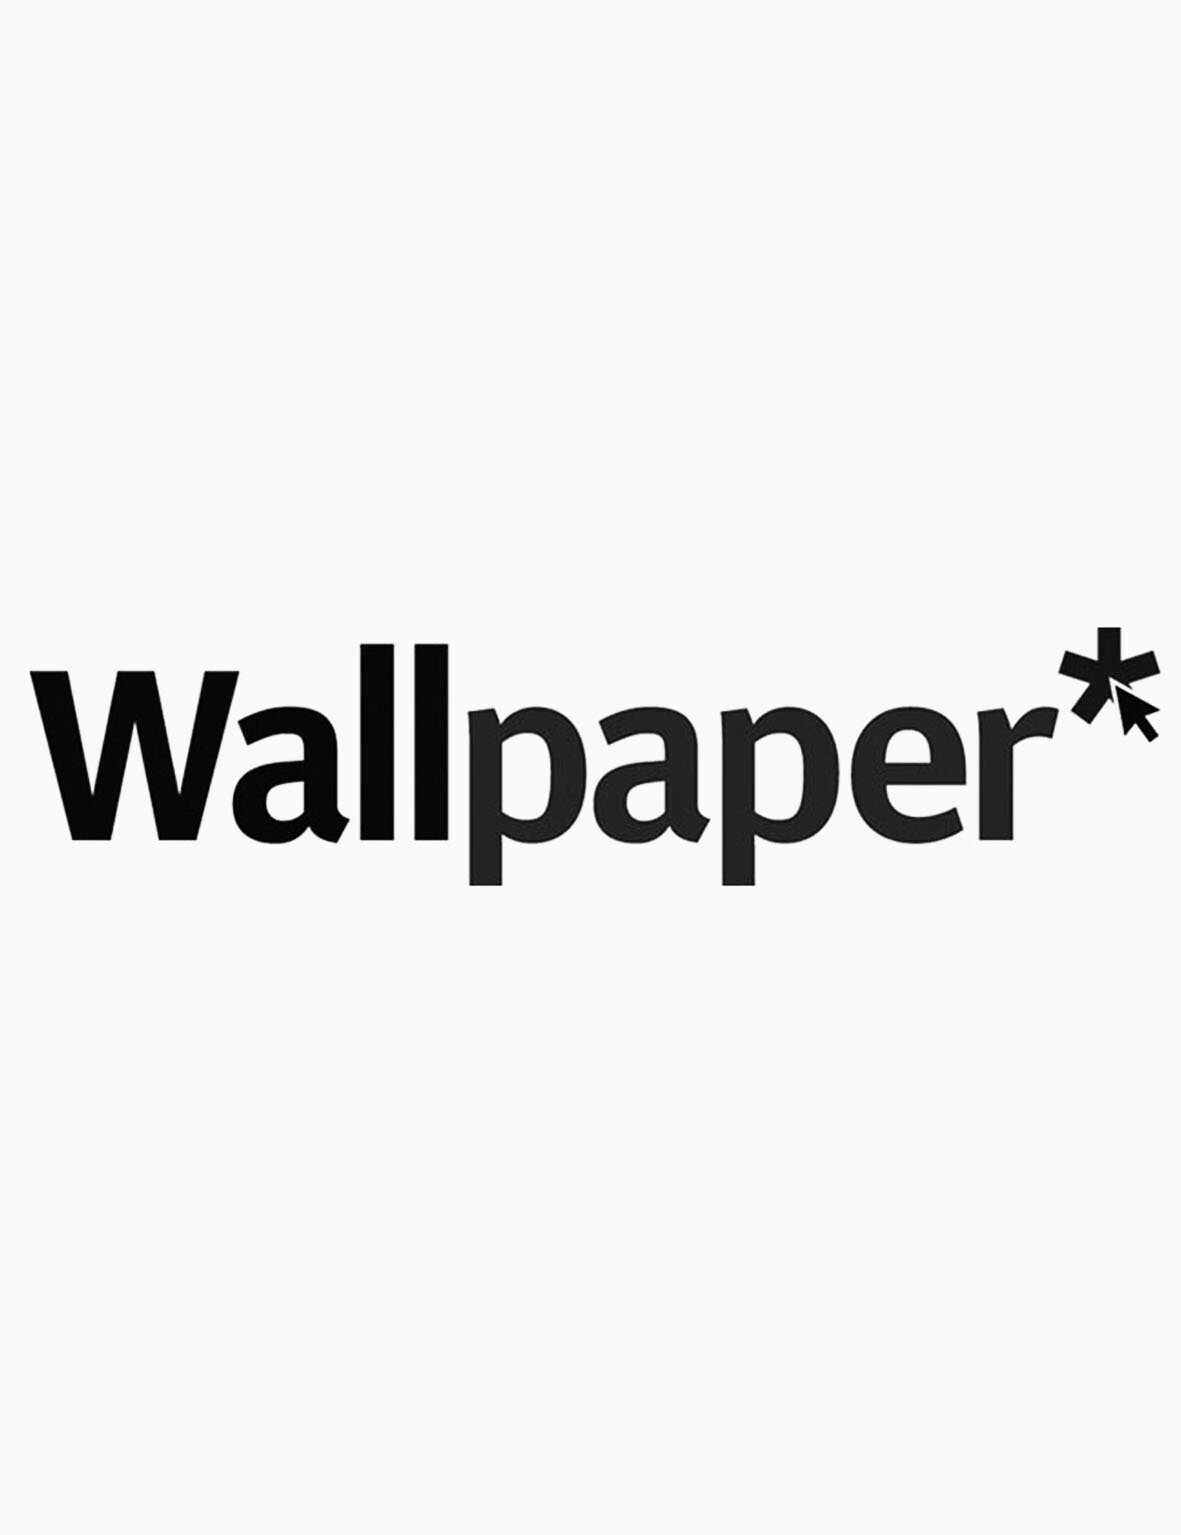 WALLPAPER, JAN 2021